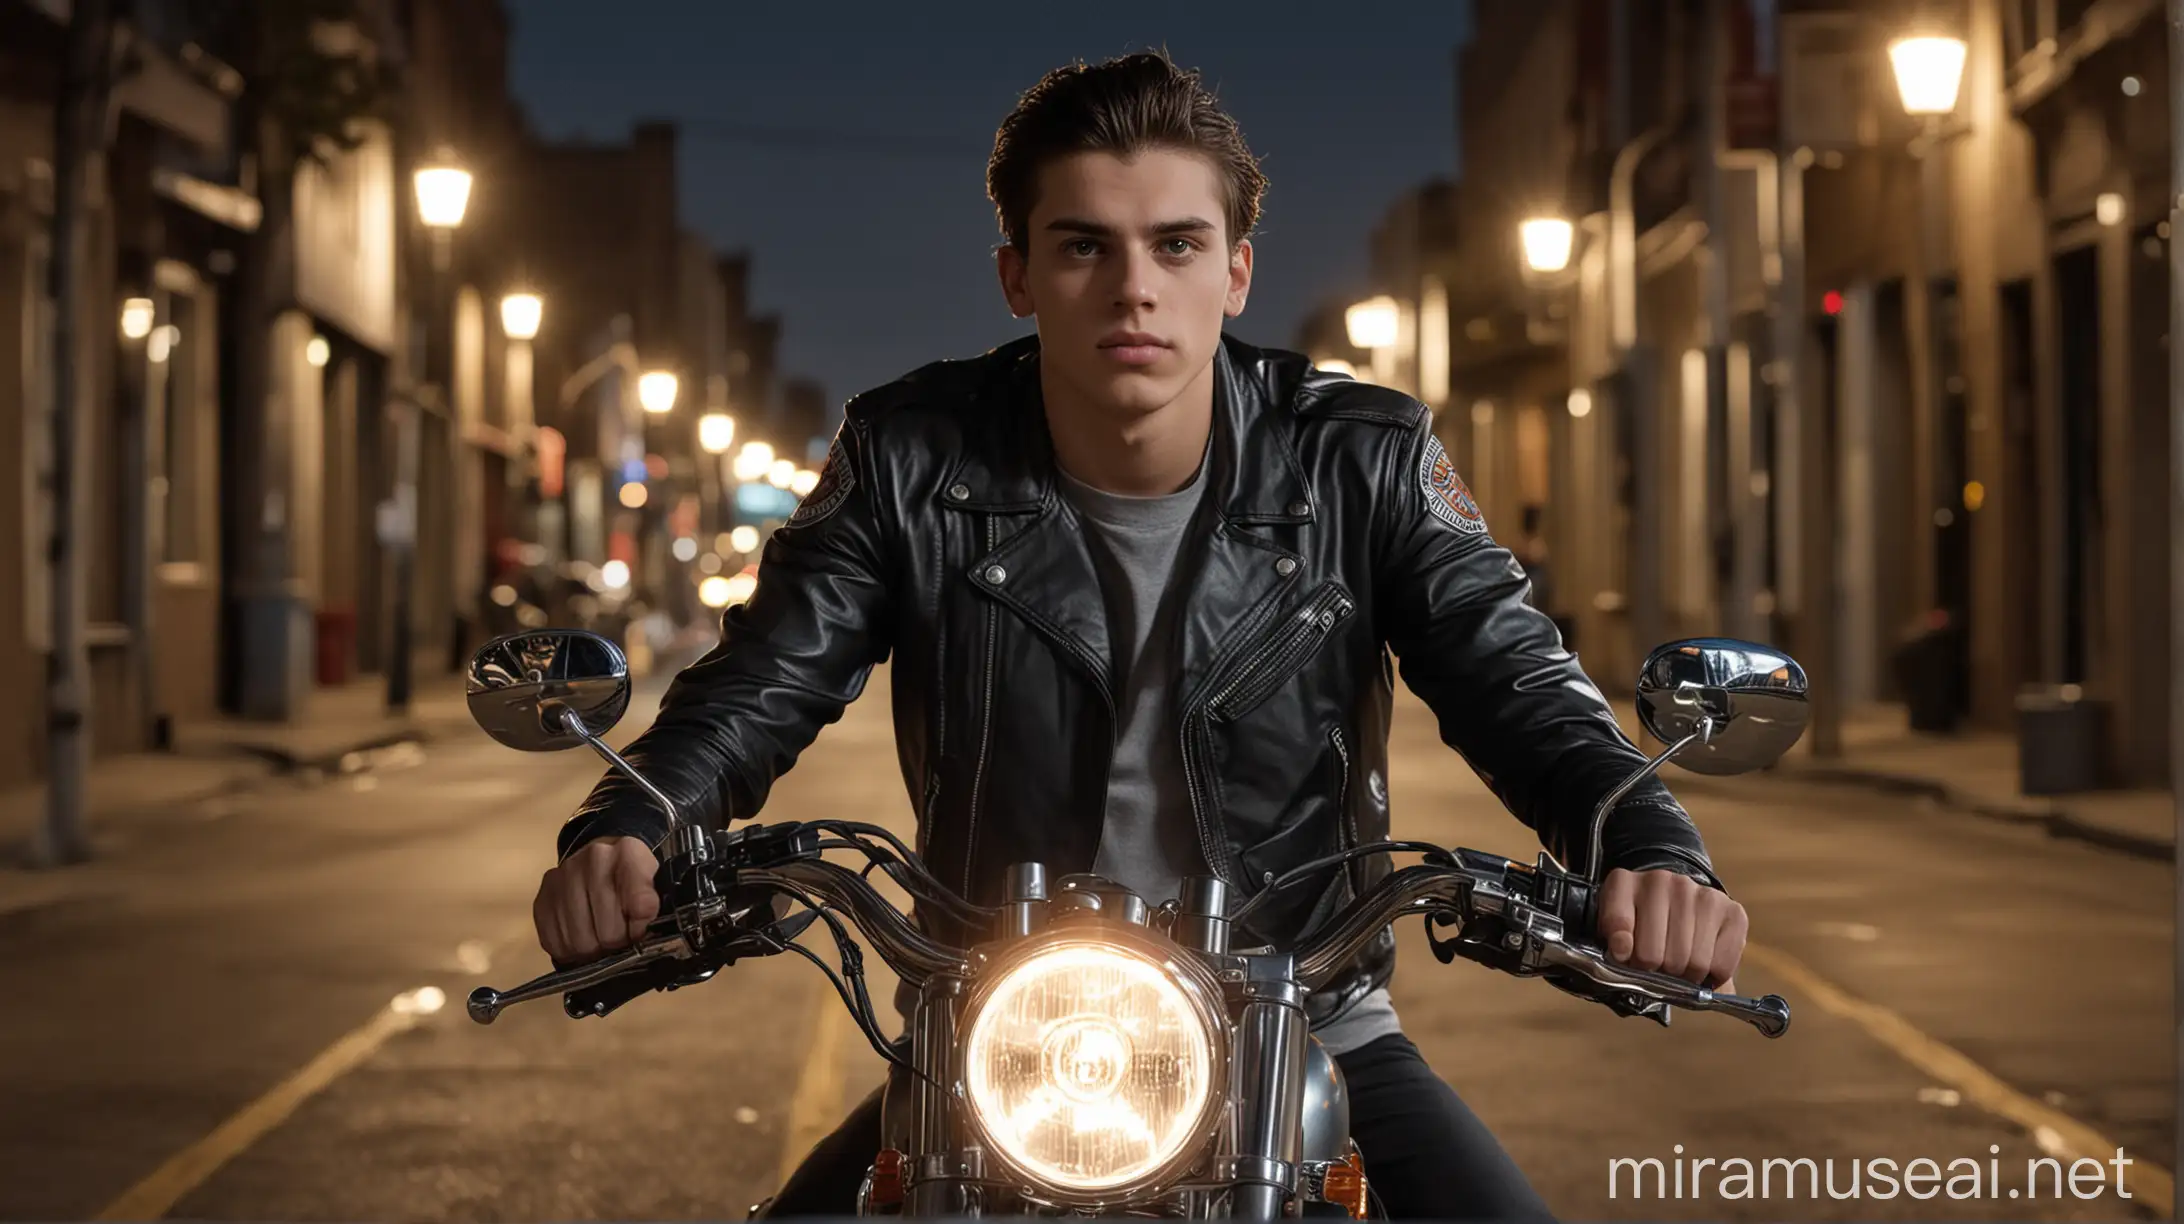 Young Man Riding Harley Davidson Motorbike at Night